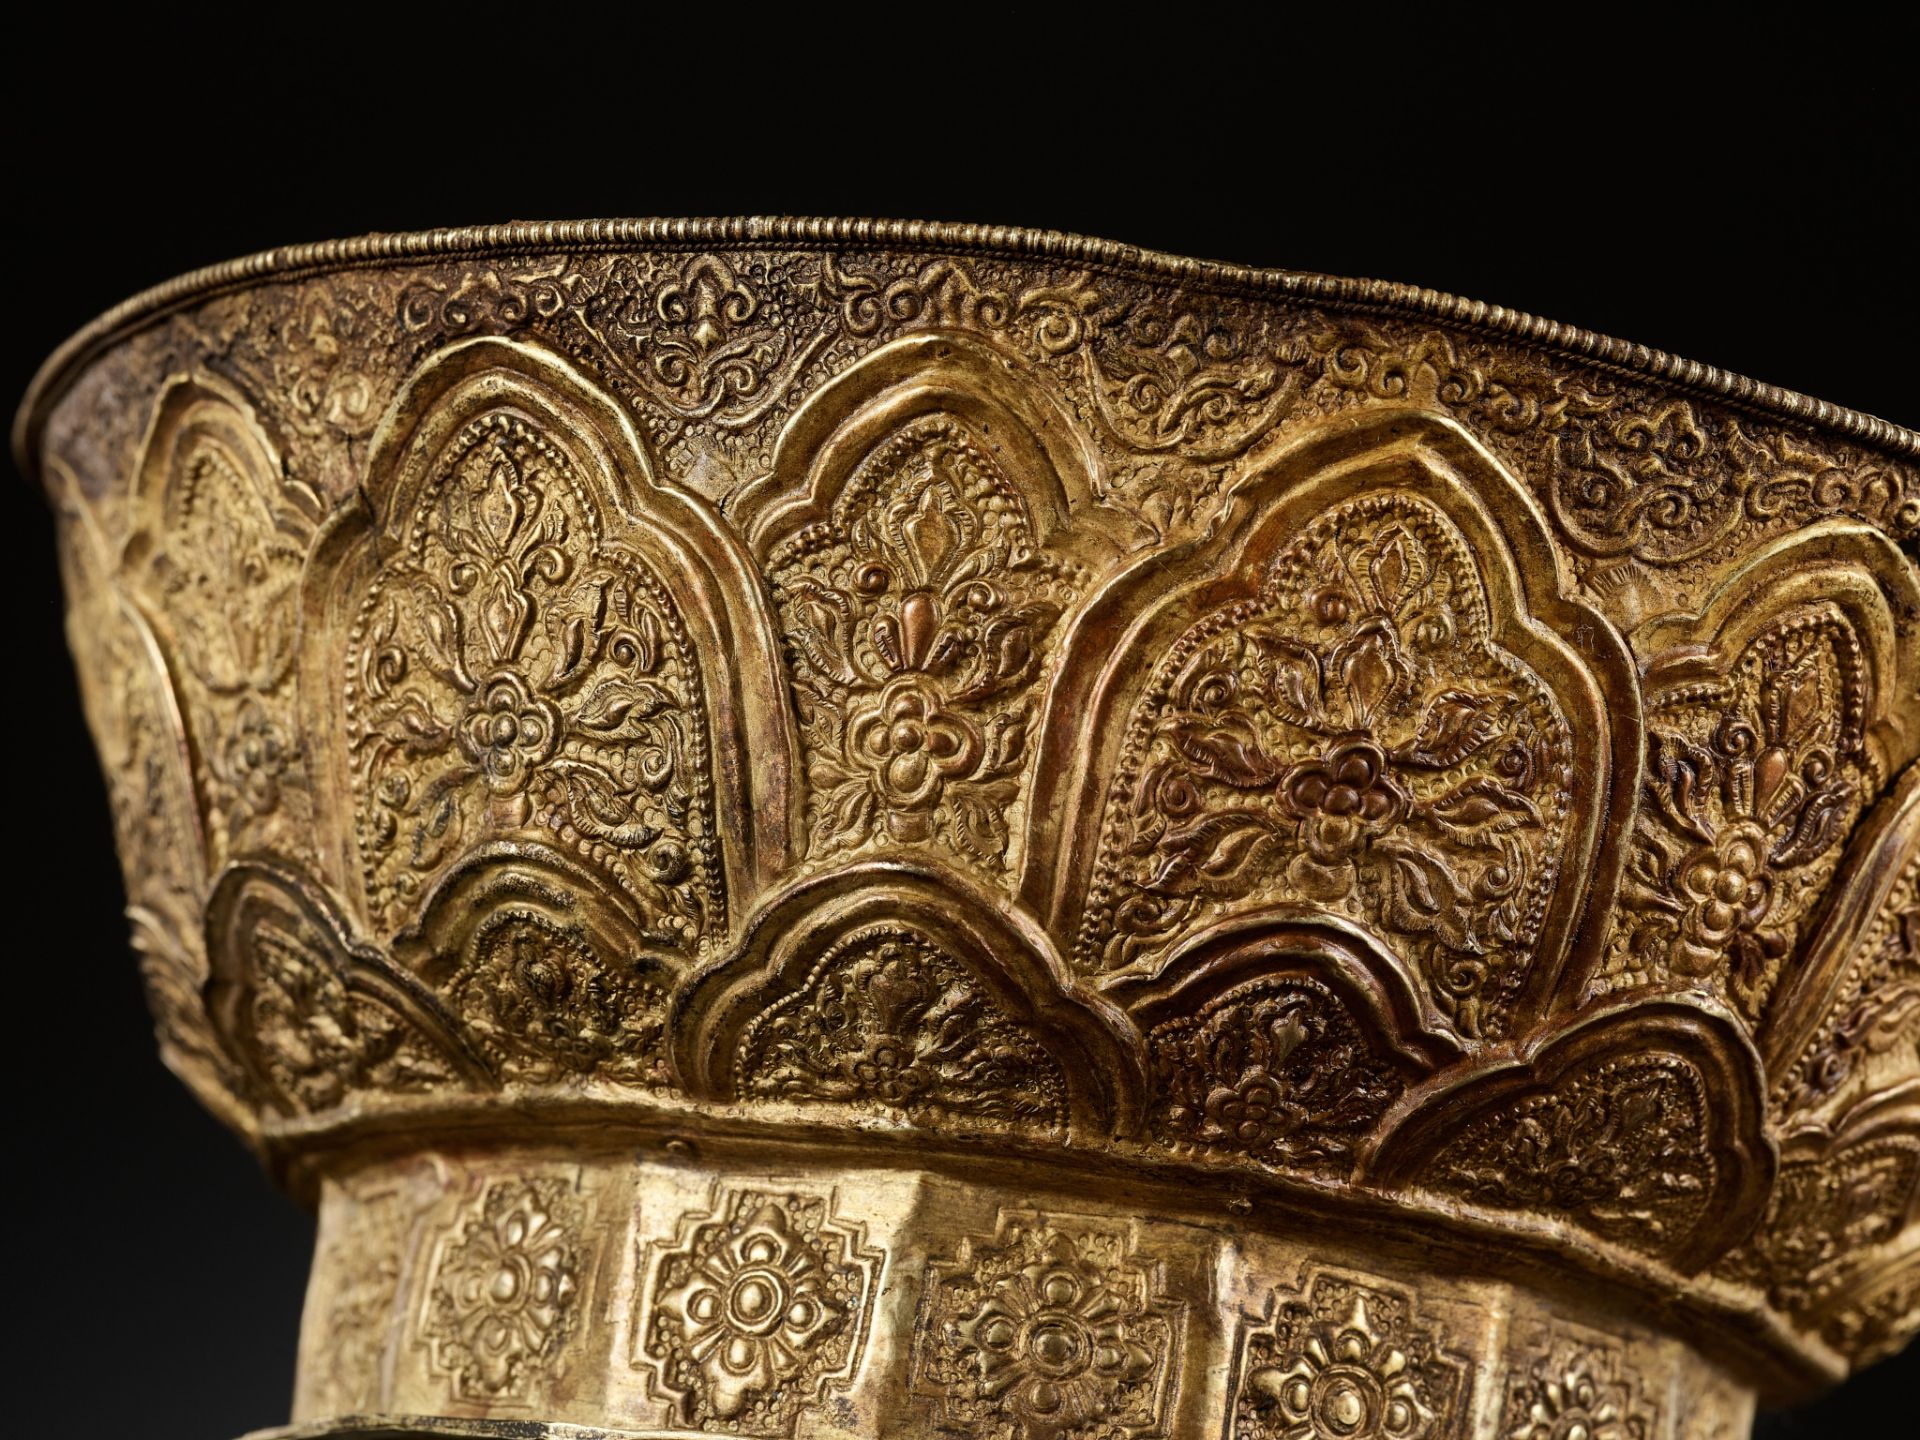 A SILVER-INLAID GOLD REPOUSSÉ BOWL DEPICTING GARUDA, VIETNAM,FORMER KINGDOMS OF CHAMPA,CIRCA 10TH C. - Image 3 of 18